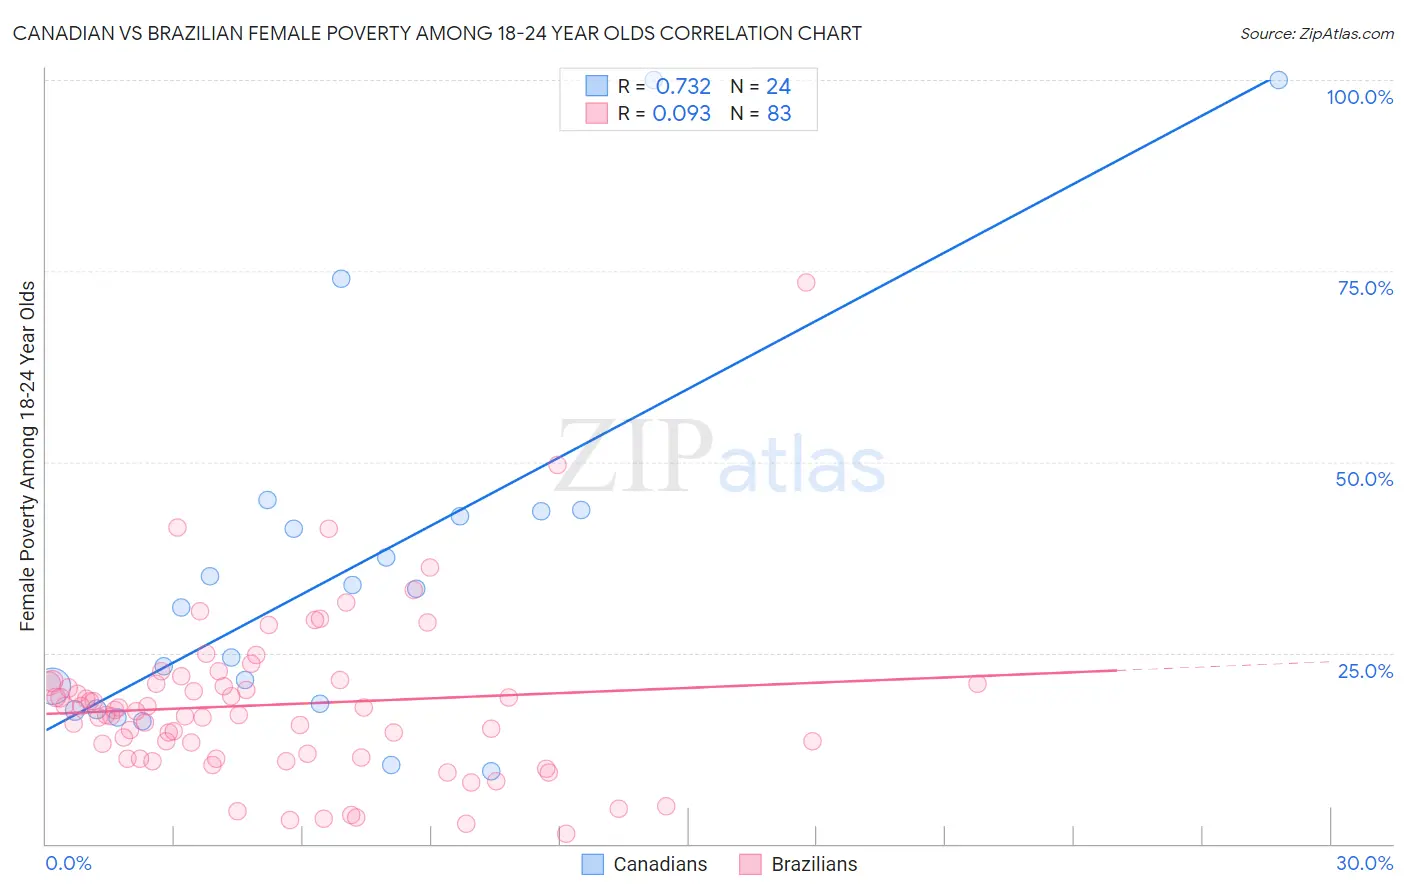 Canadian vs Brazilian Female Poverty Among 18-24 Year Olds